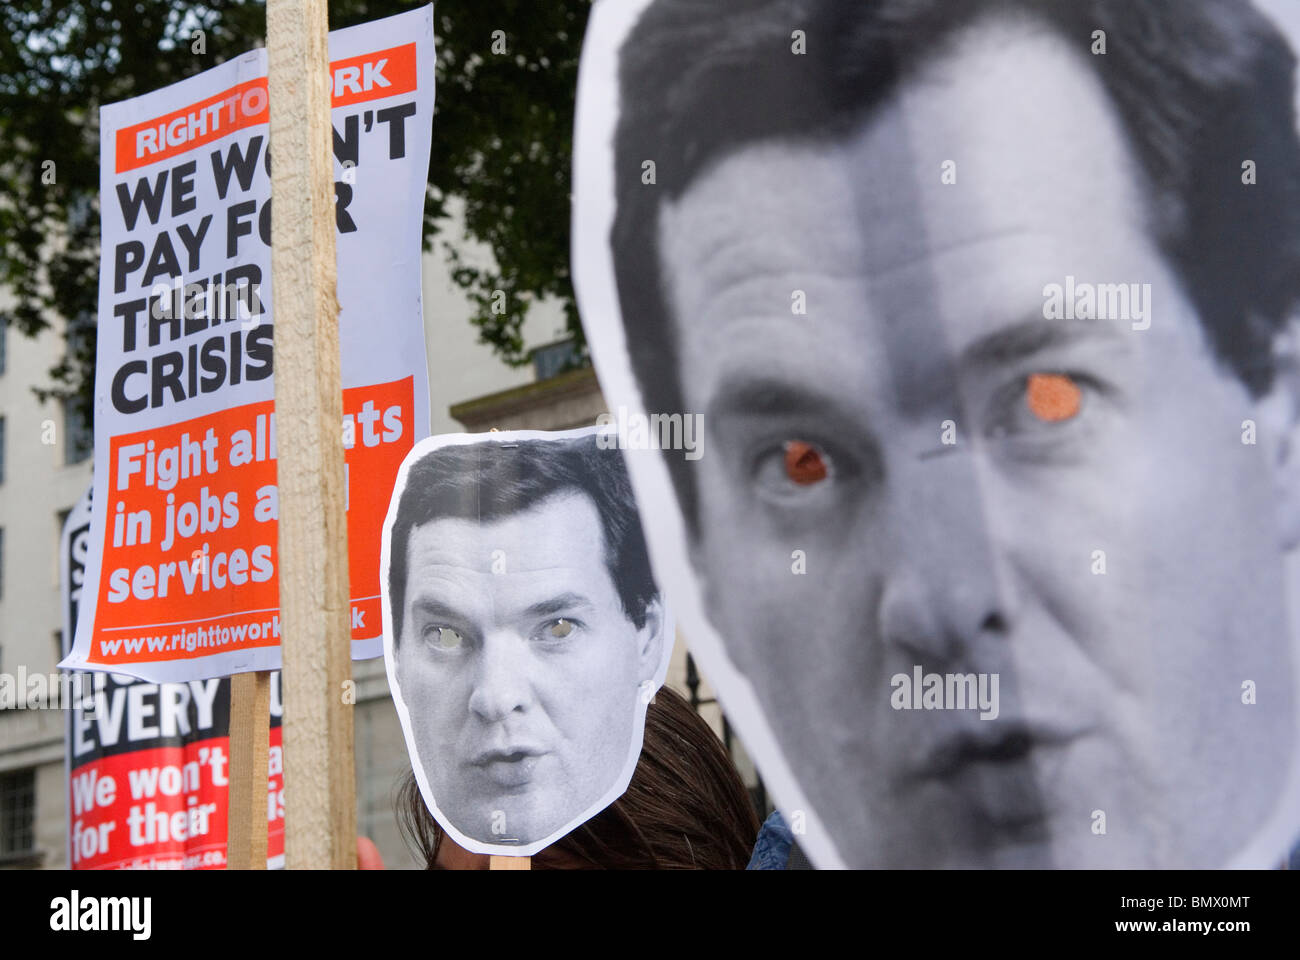 George Osborne Protest Demo gegen vorgeschlagene Budget-Tag. Koalition-Regierung-Demonstration-London-UK Stockfoto